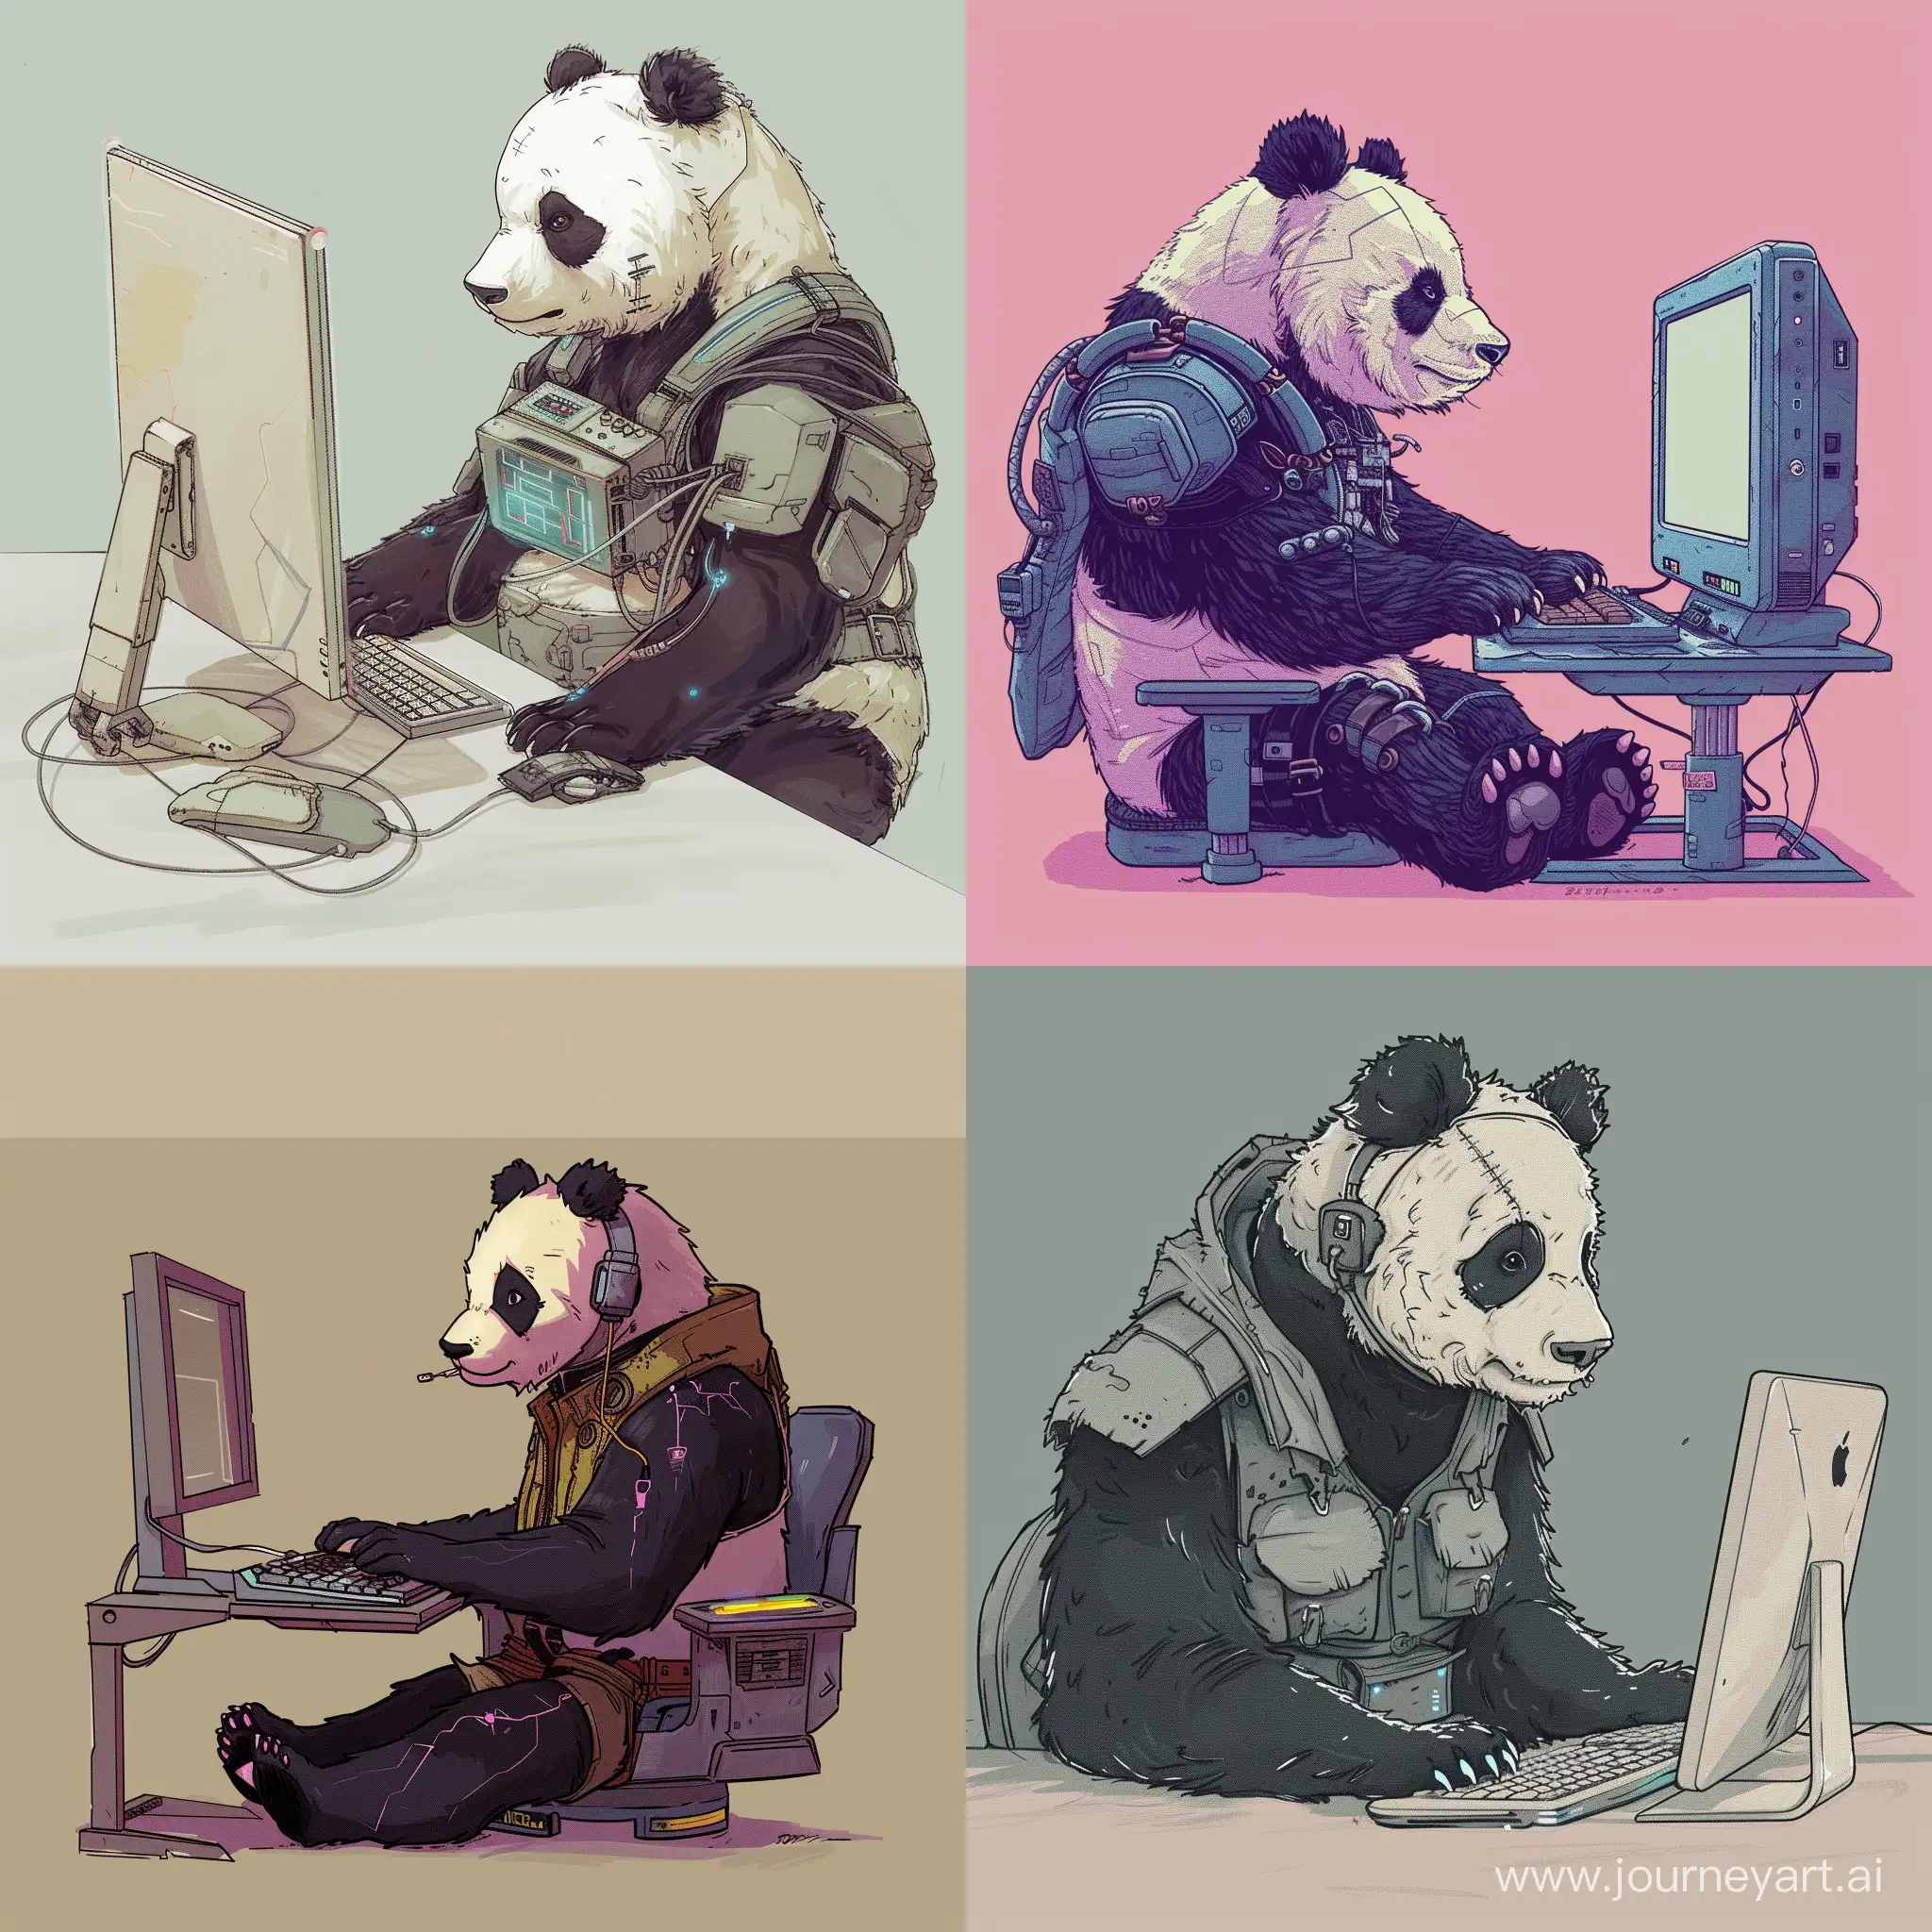 A cyberpunk panda sits at a personal computer